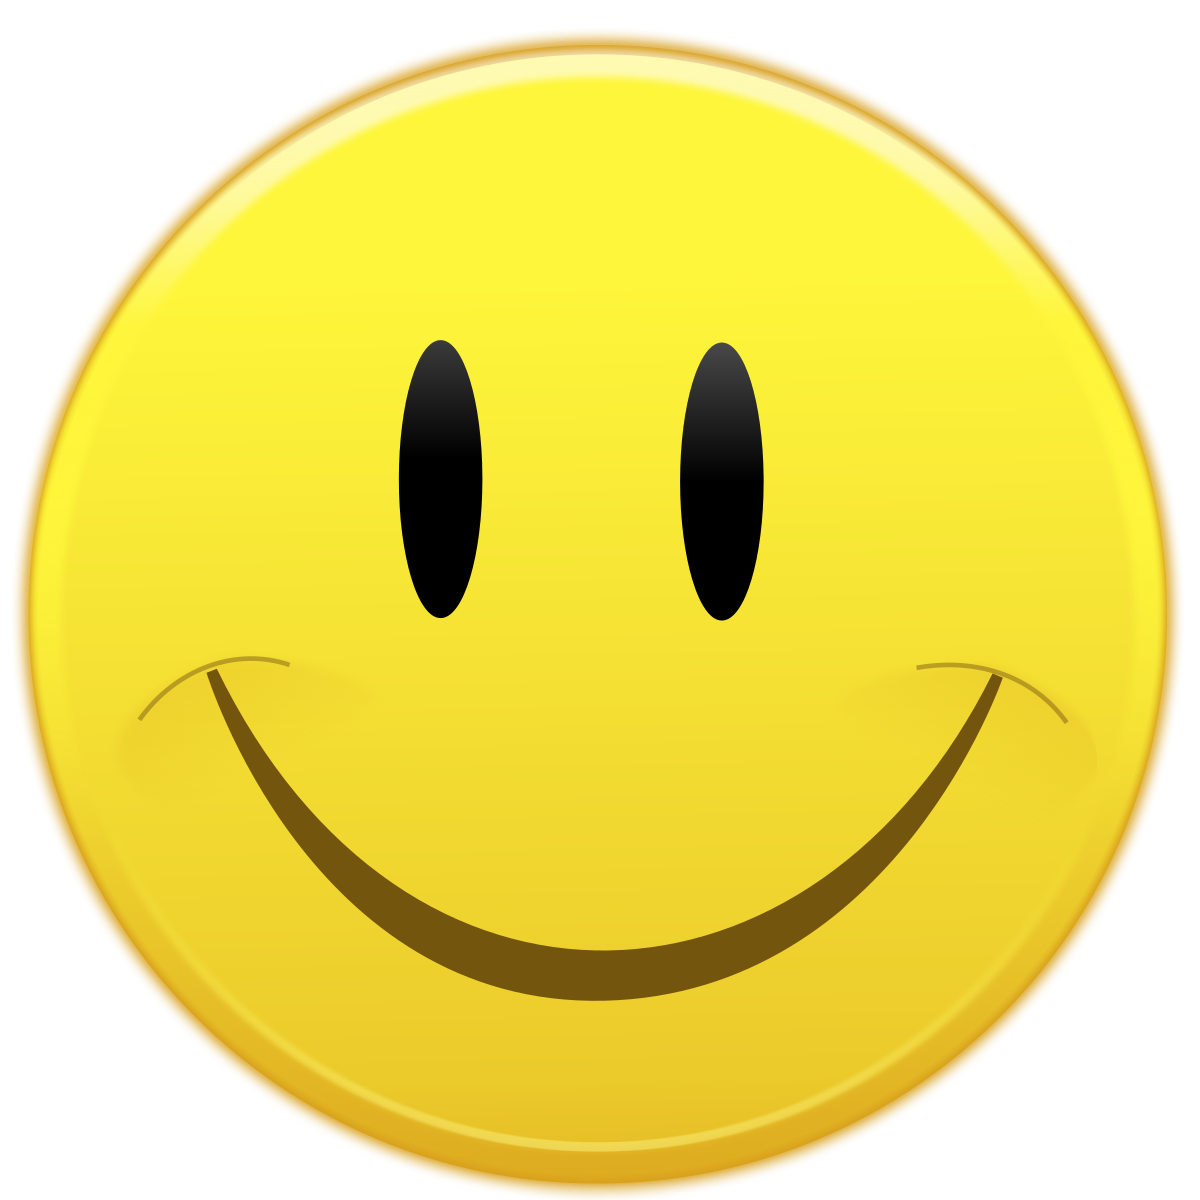 A smiling emoji.